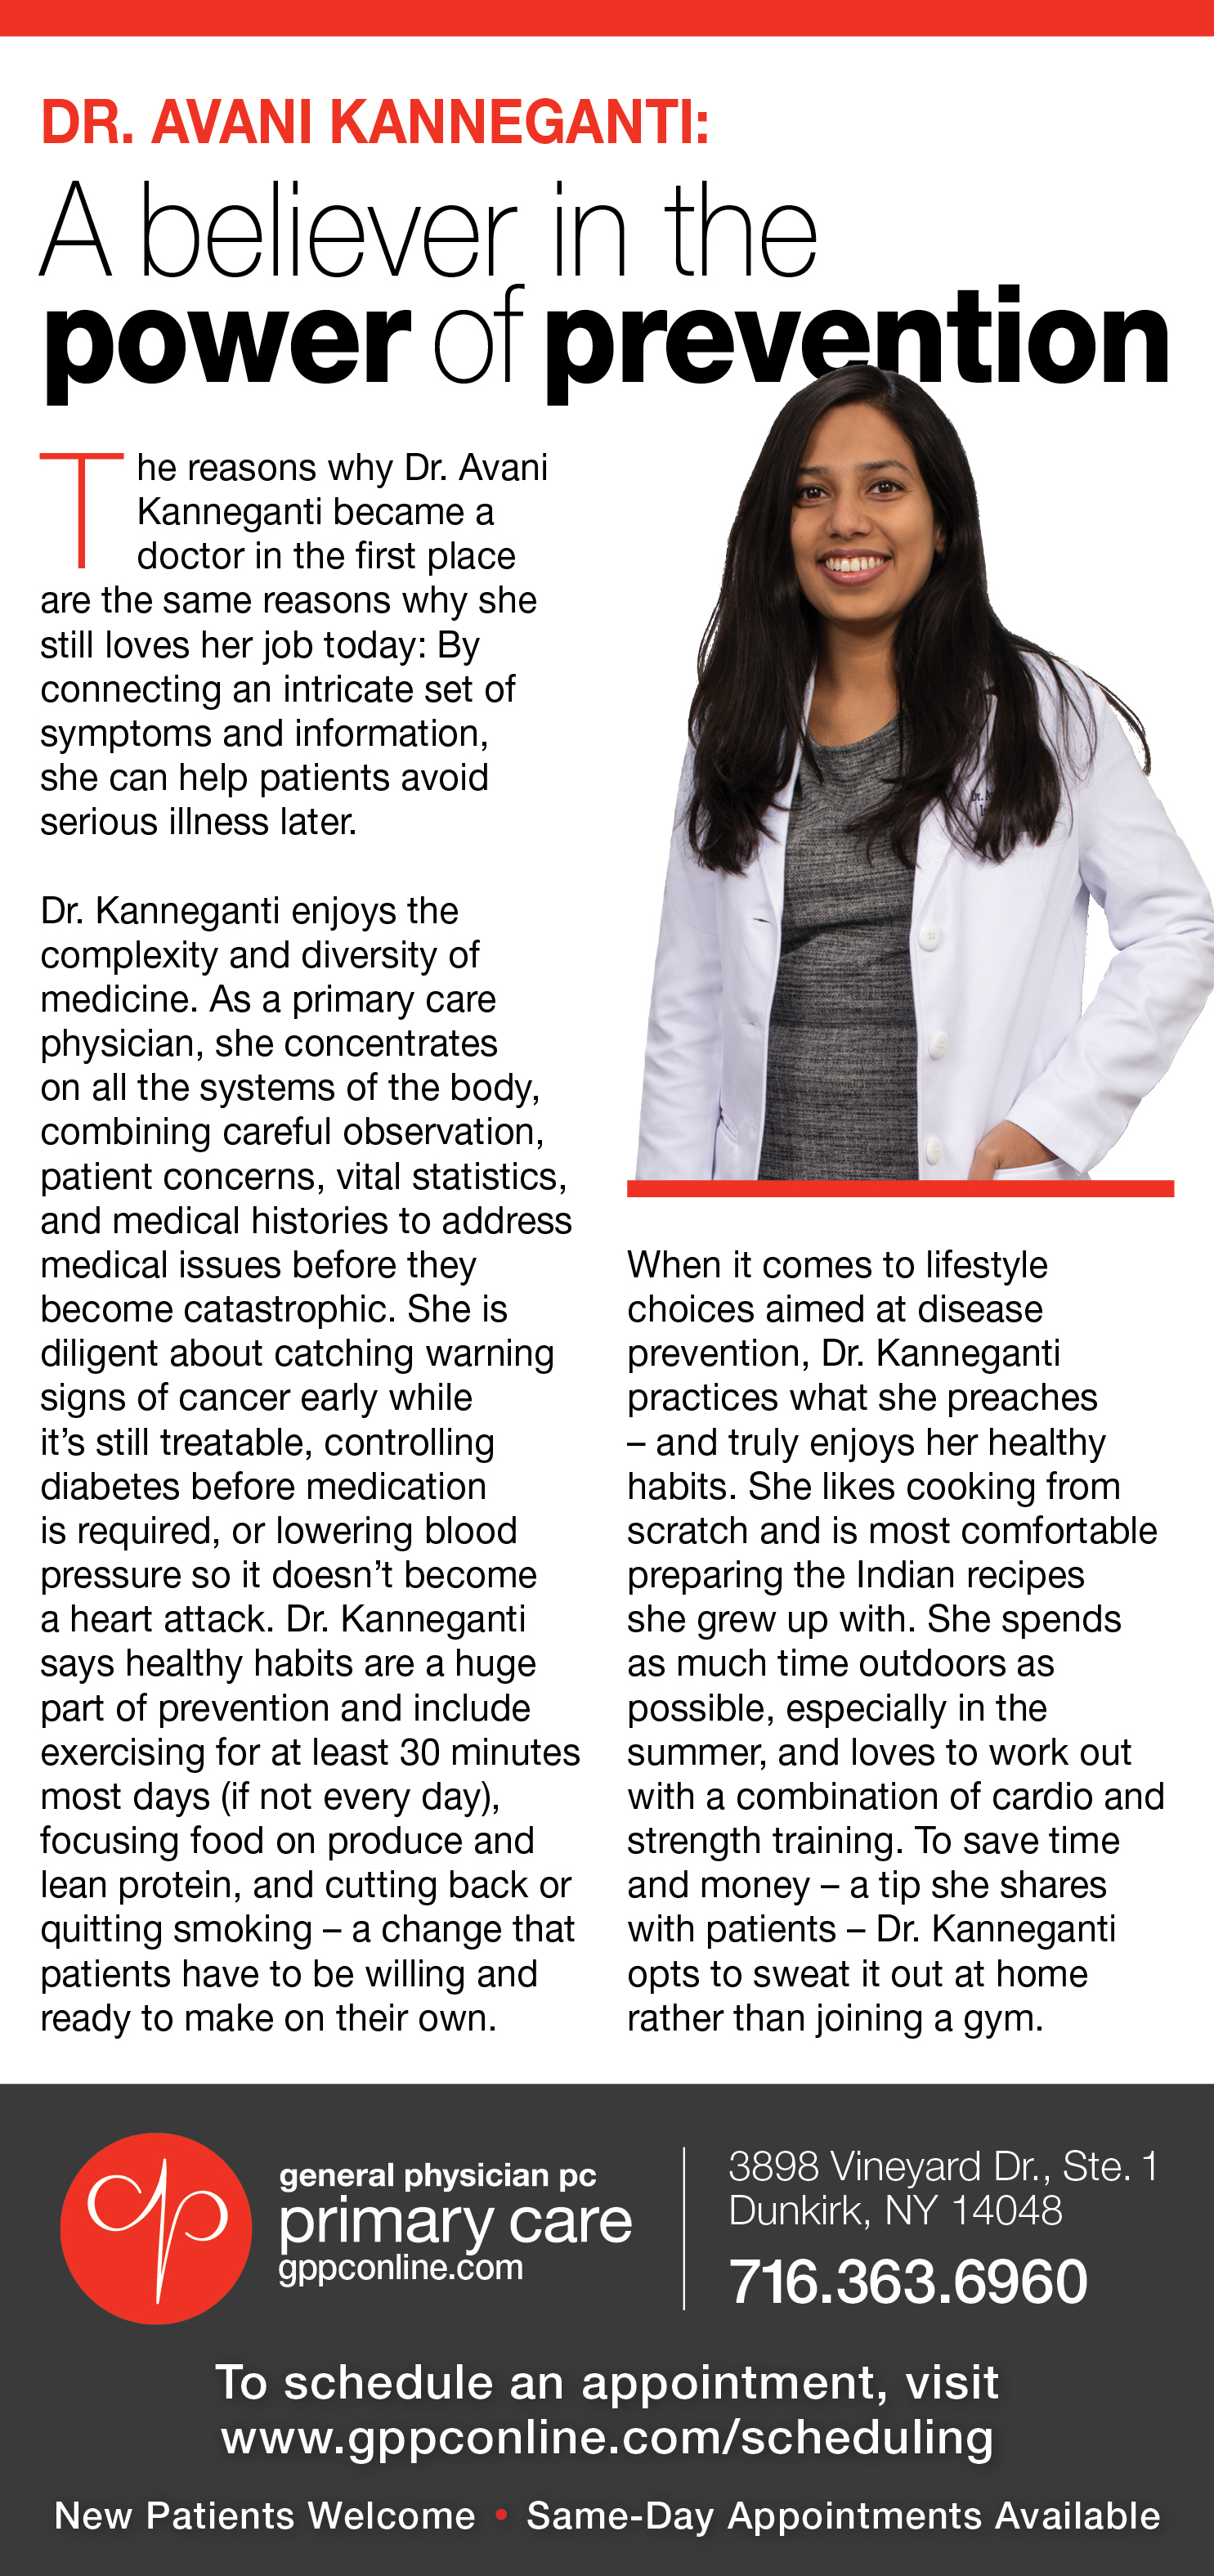 Dr. Avani Kanneganti - Believer in the Power of Prevention